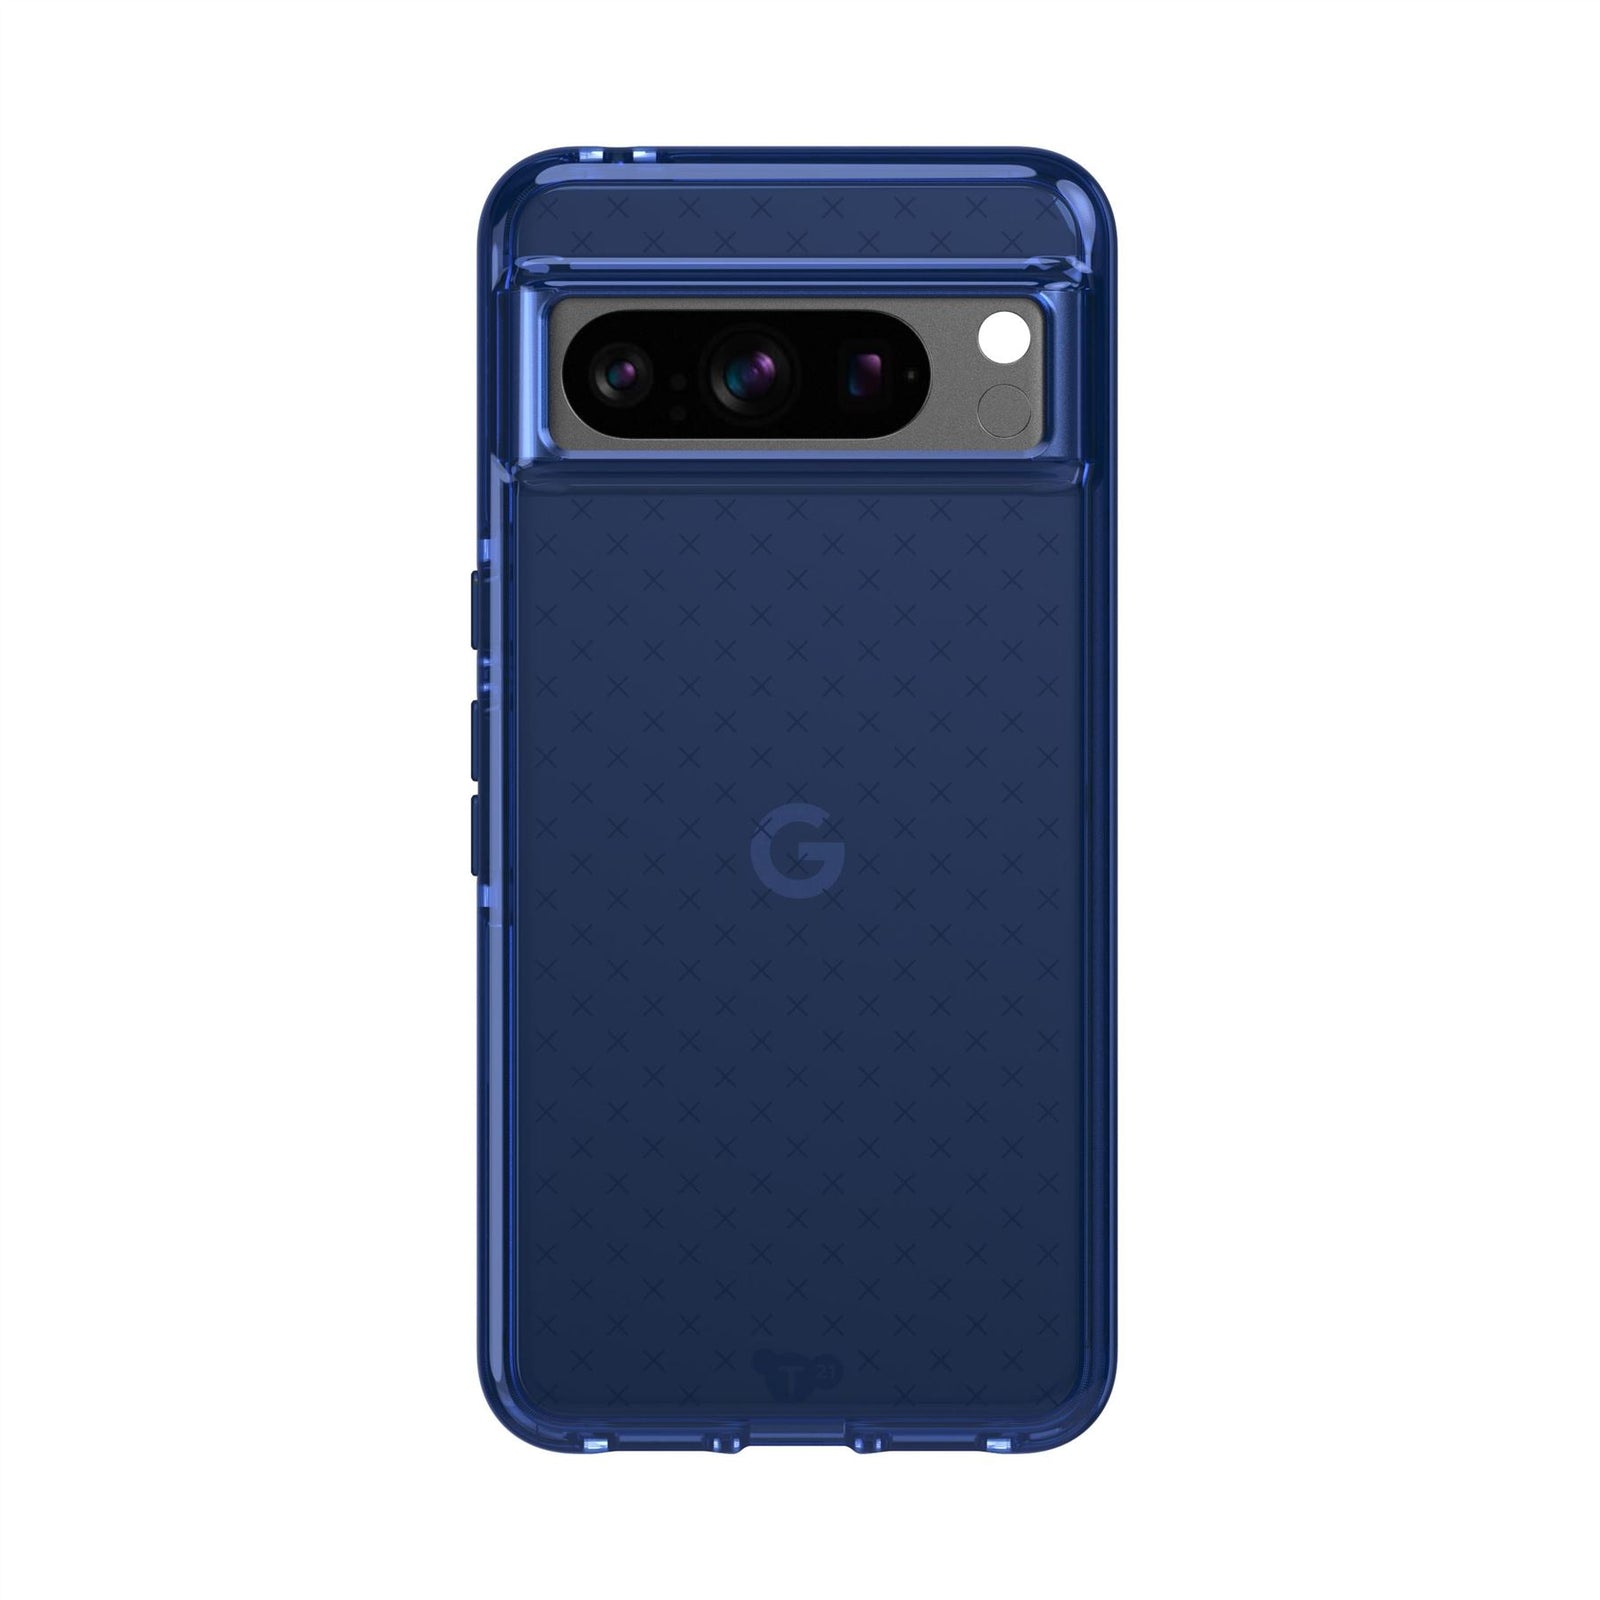 Google Phone Cases | Multi-Drop Phone Protection & Tech21 - AUS